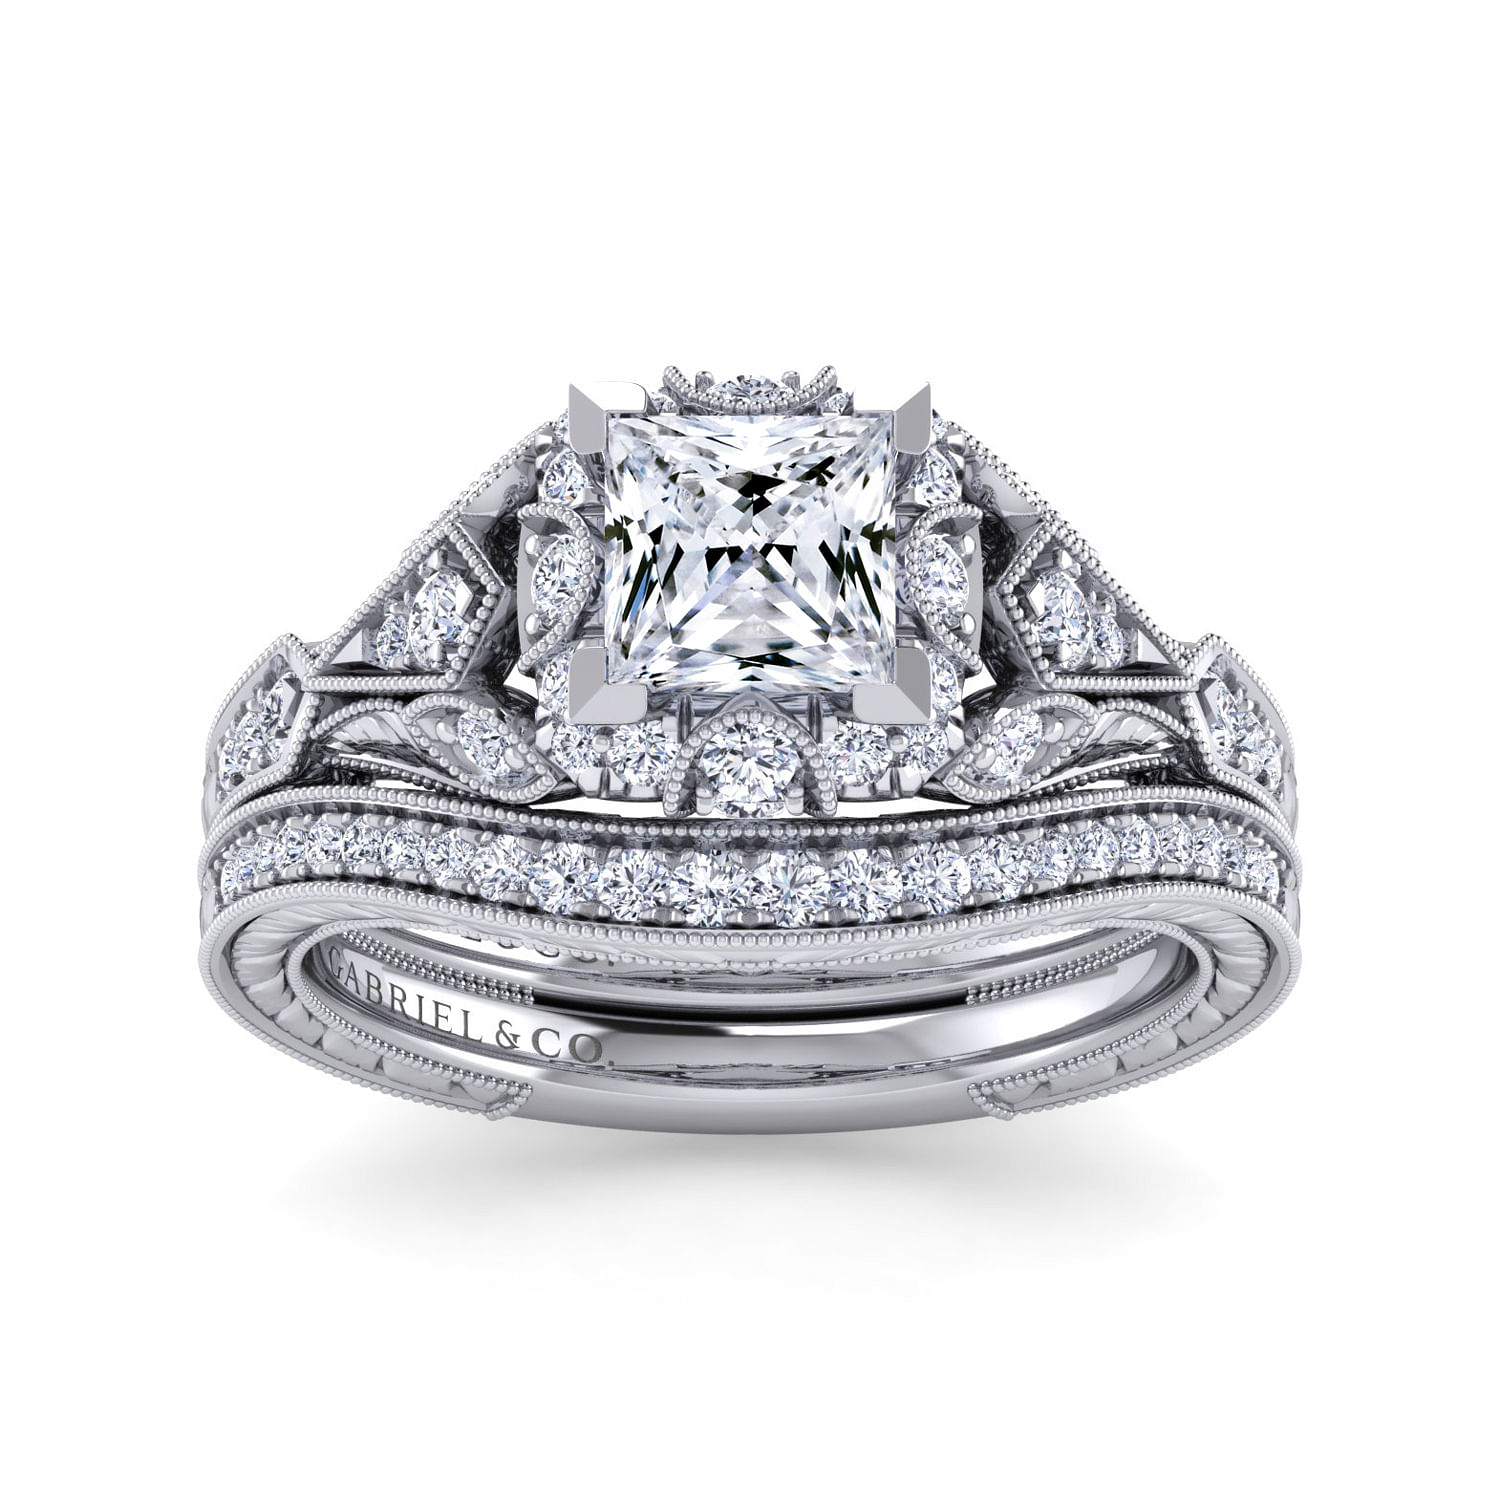 Unique 14K White Gold Vintage Inspired Princess Cut Diamond Halo Engagement Ring